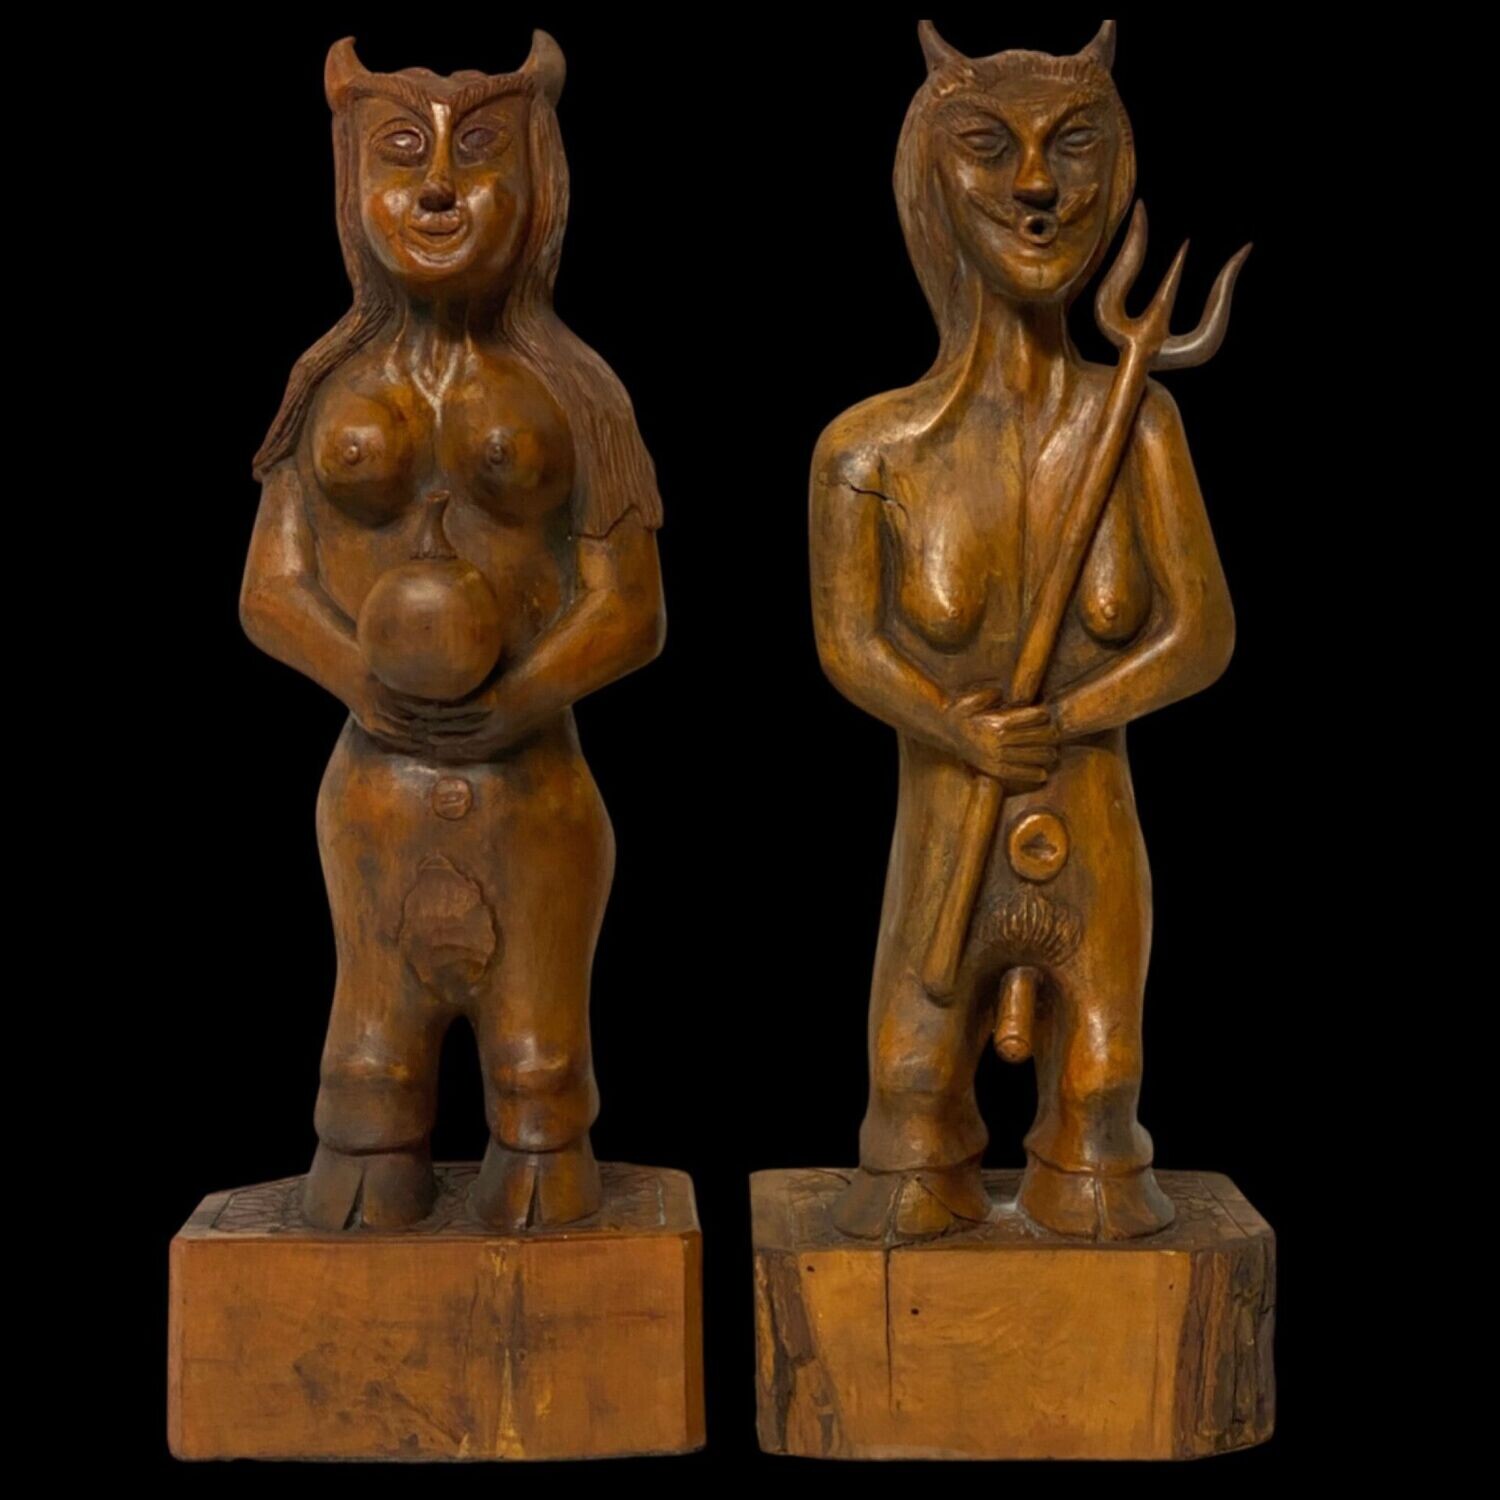 Pair of devils wood sculptures Germany circa 1900 Folk art
​